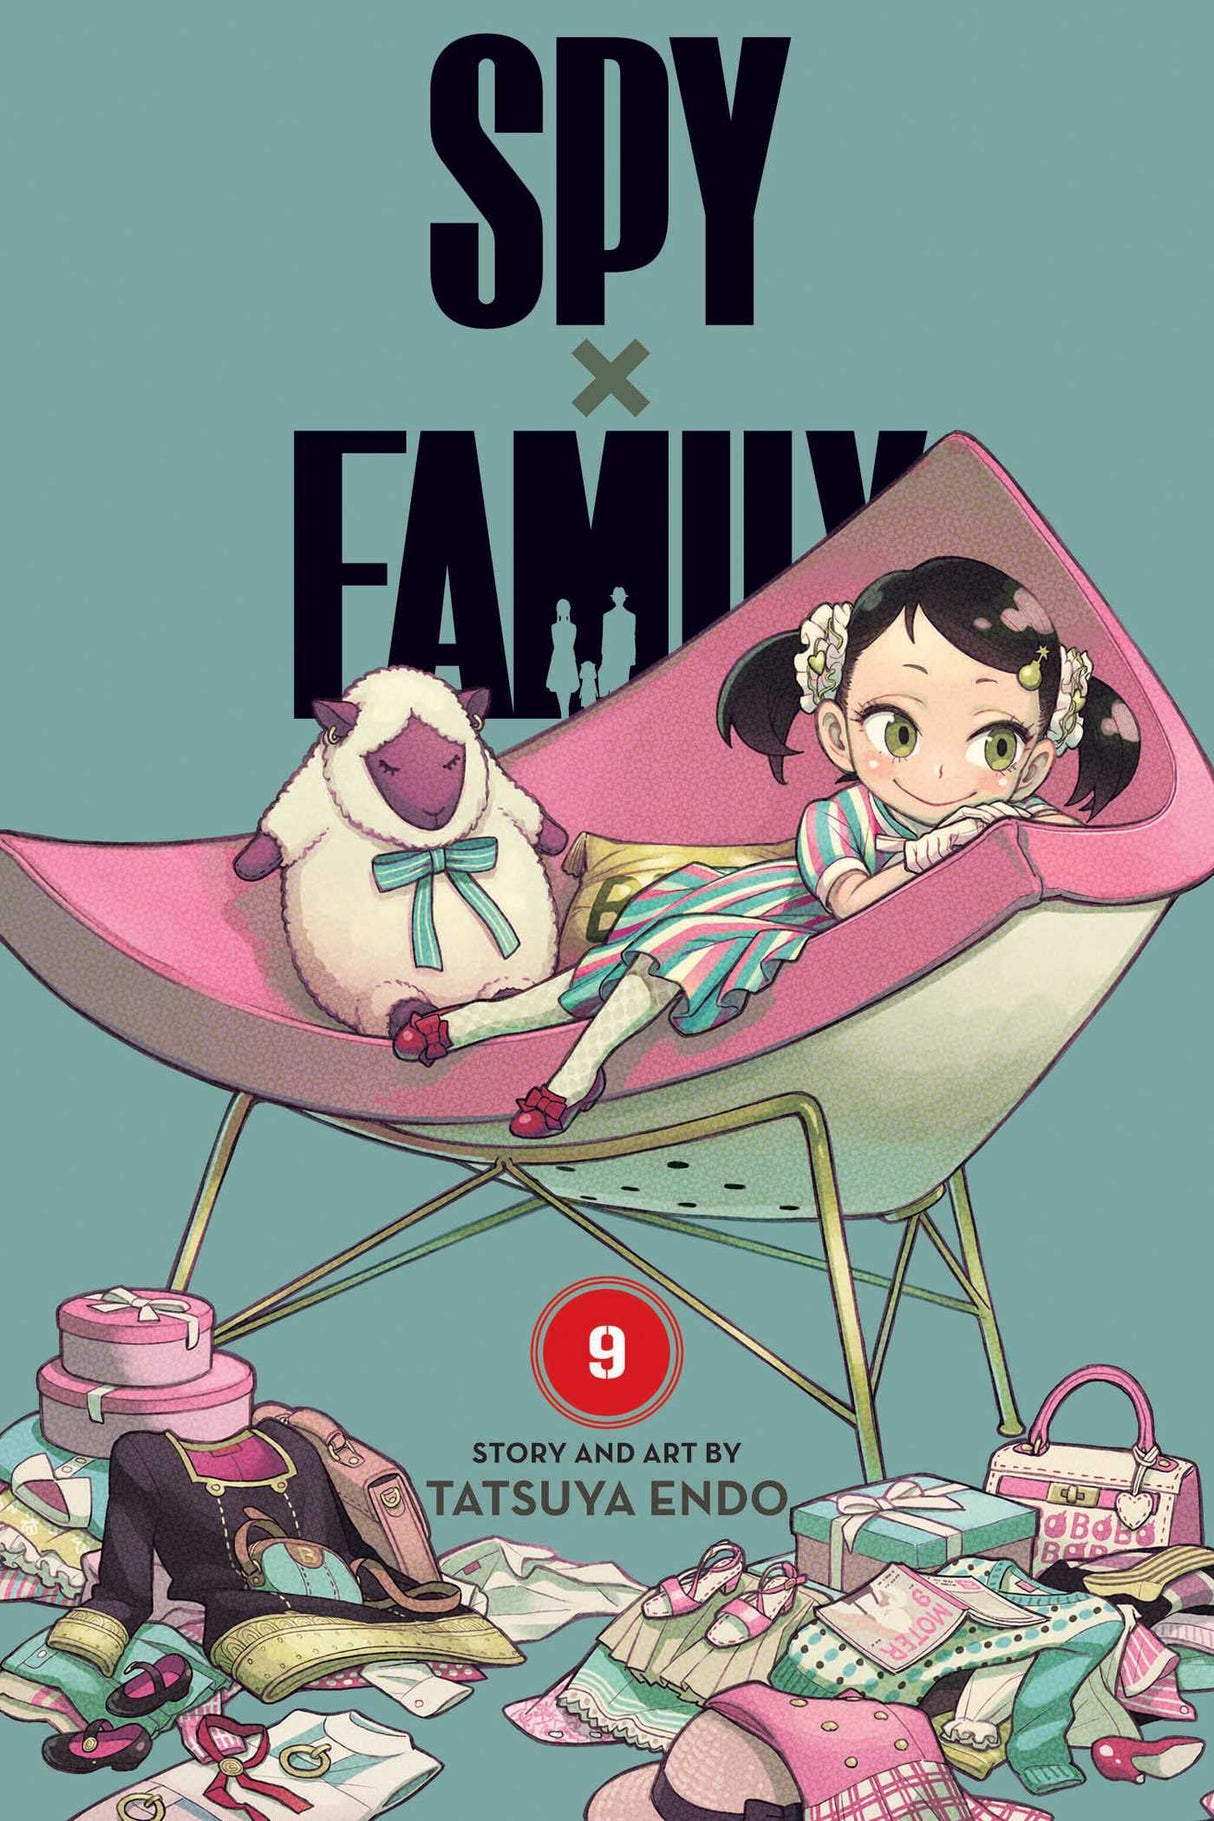 Cover image of the Manga Spy X Family, Vol. 9